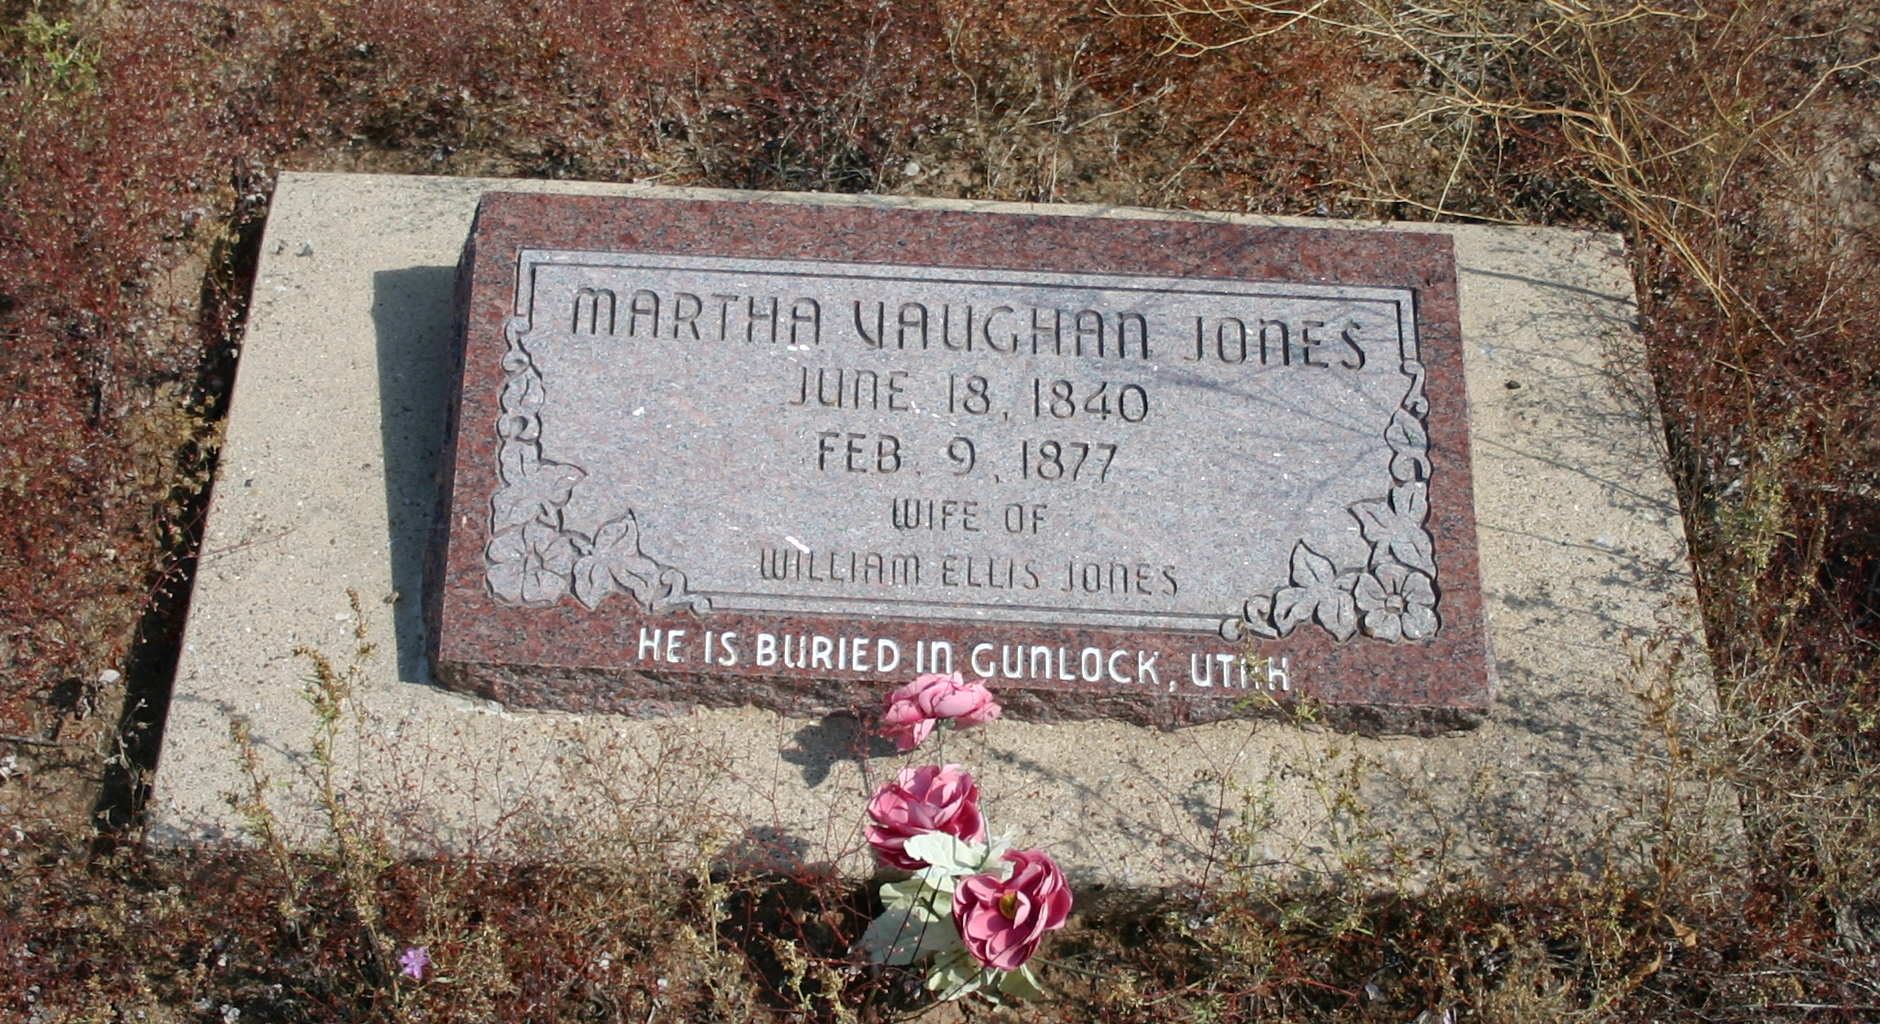 Martha Vaughan Jones gravestone at the Hebron Cemetery